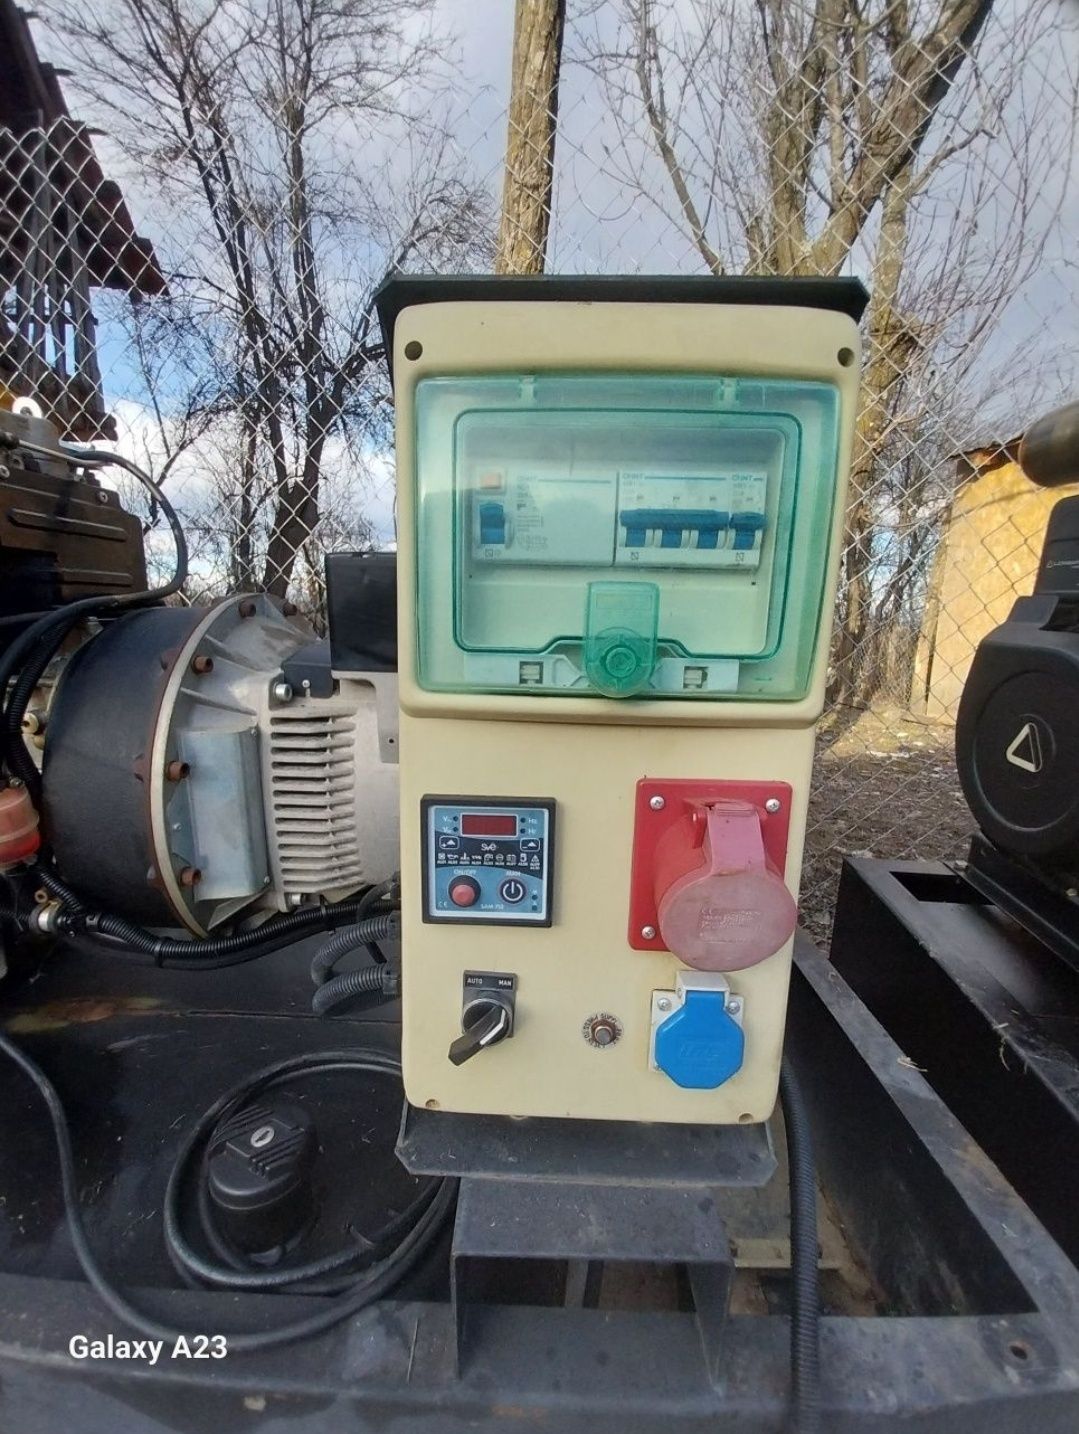 Lombardini generator 3000,nego,.kw10